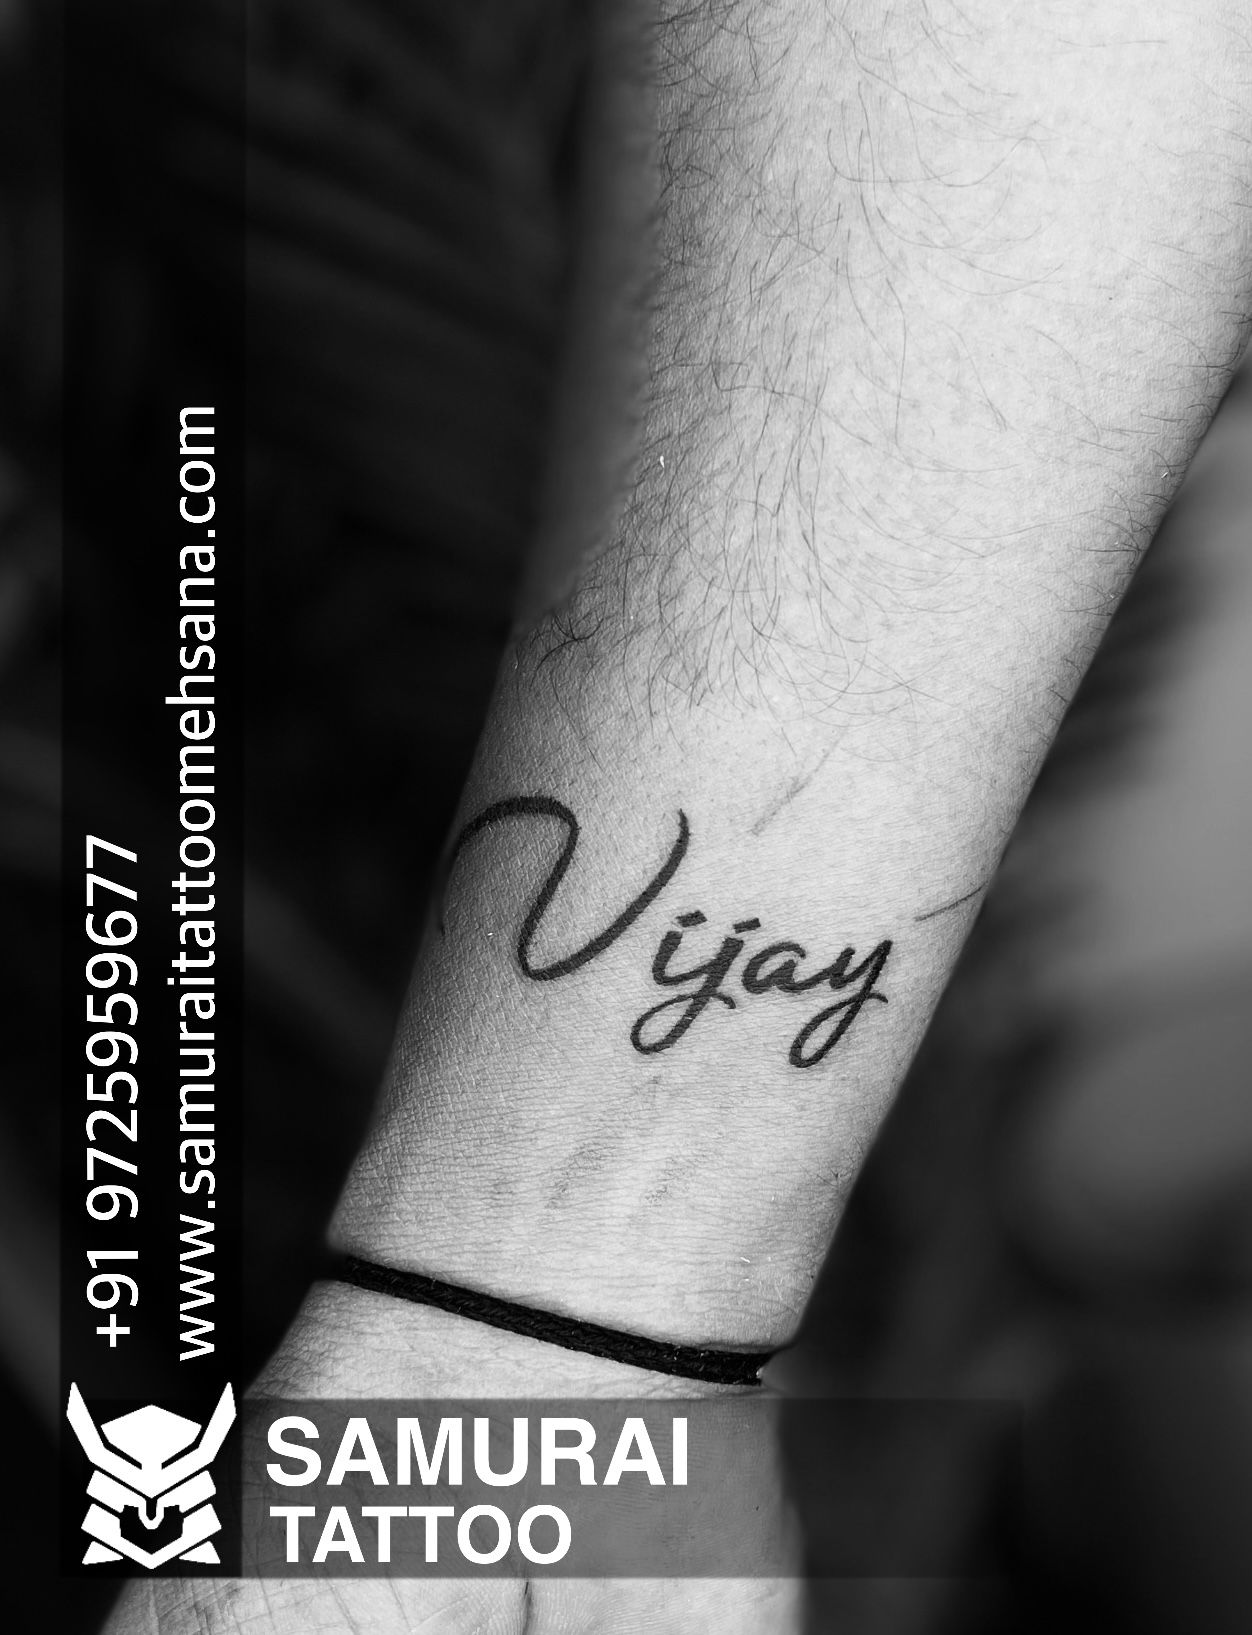 Details more than 69 vijay name tattoo images latest  thtantai2